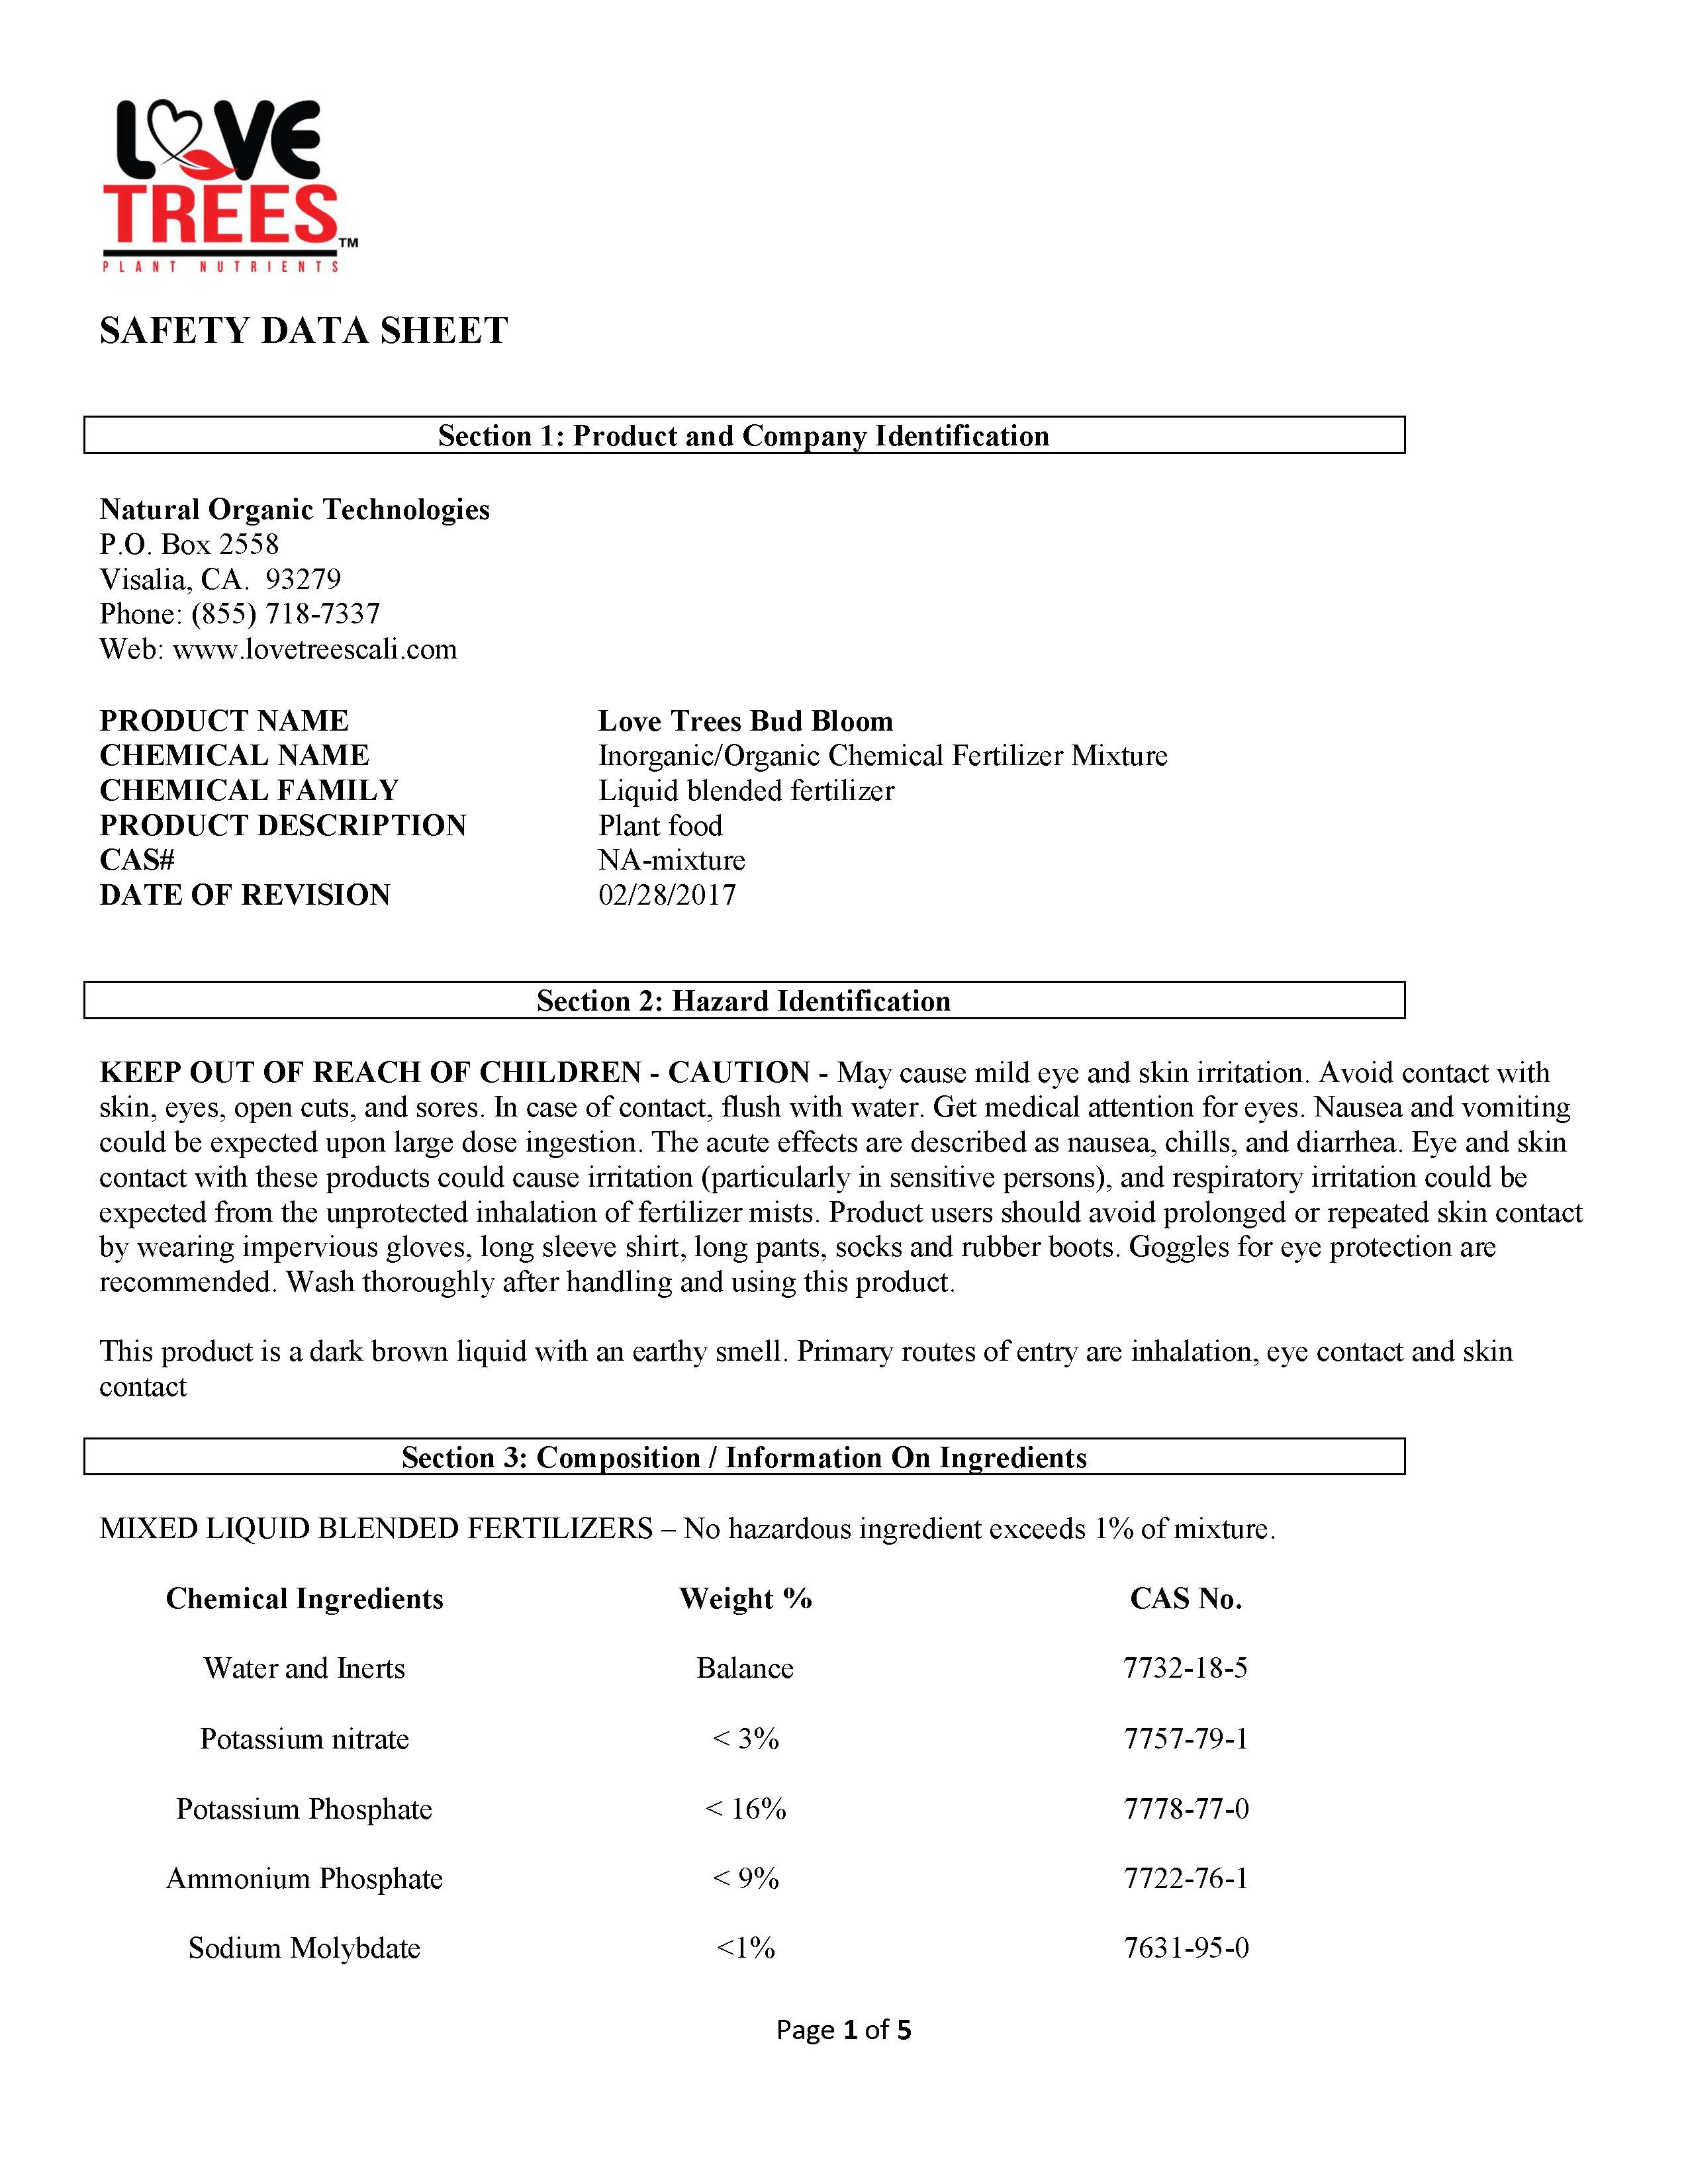 safety-data-sheet.budbloom-page-1.jpg